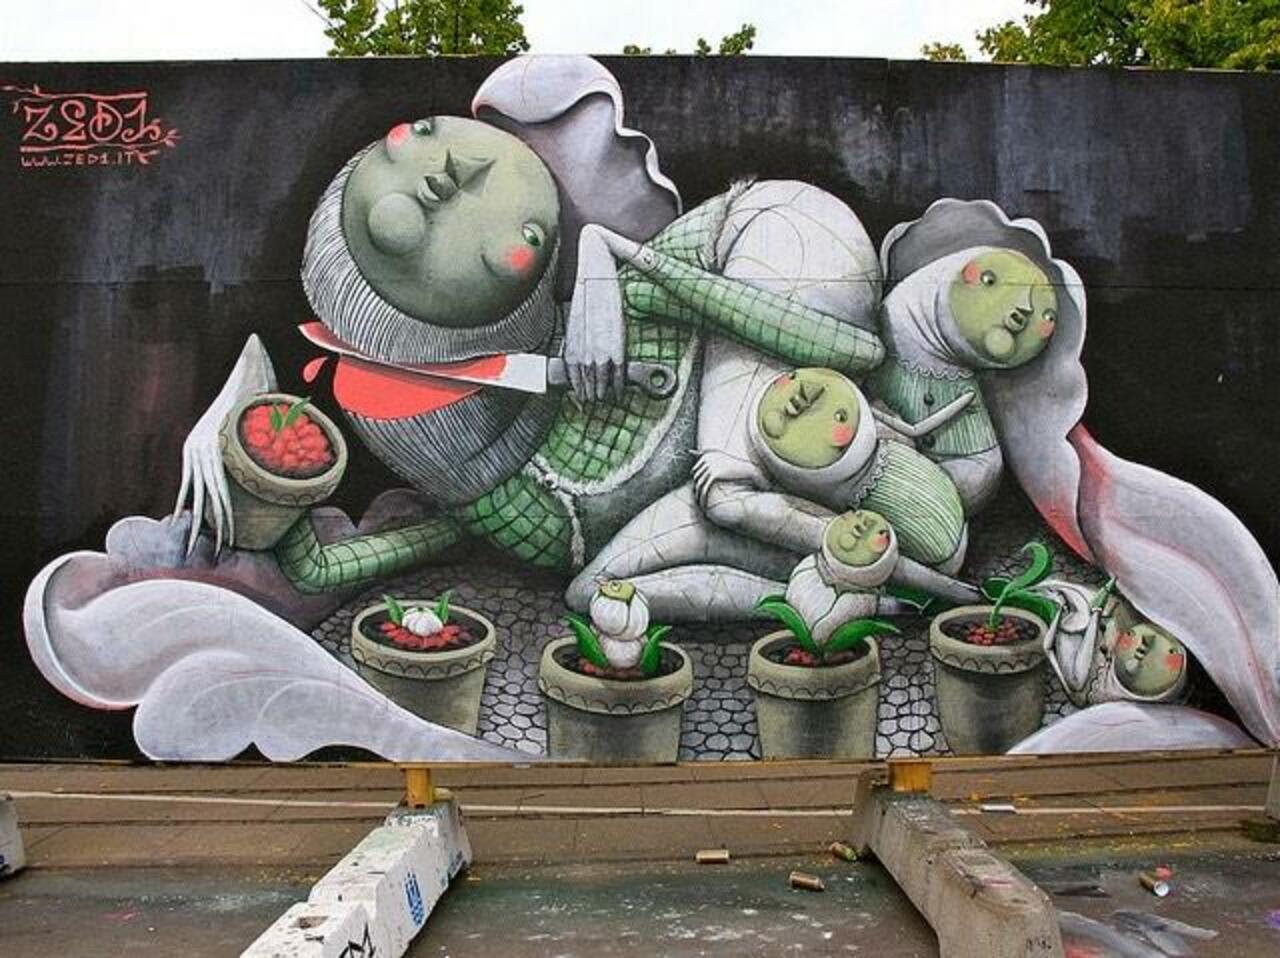 Italian artist Zed-1 (Galore Urban Art Festival)
Copenhagen

#streetart #art #Graffiti #mural #Copenhagen http://t.co/23H07uuYZe